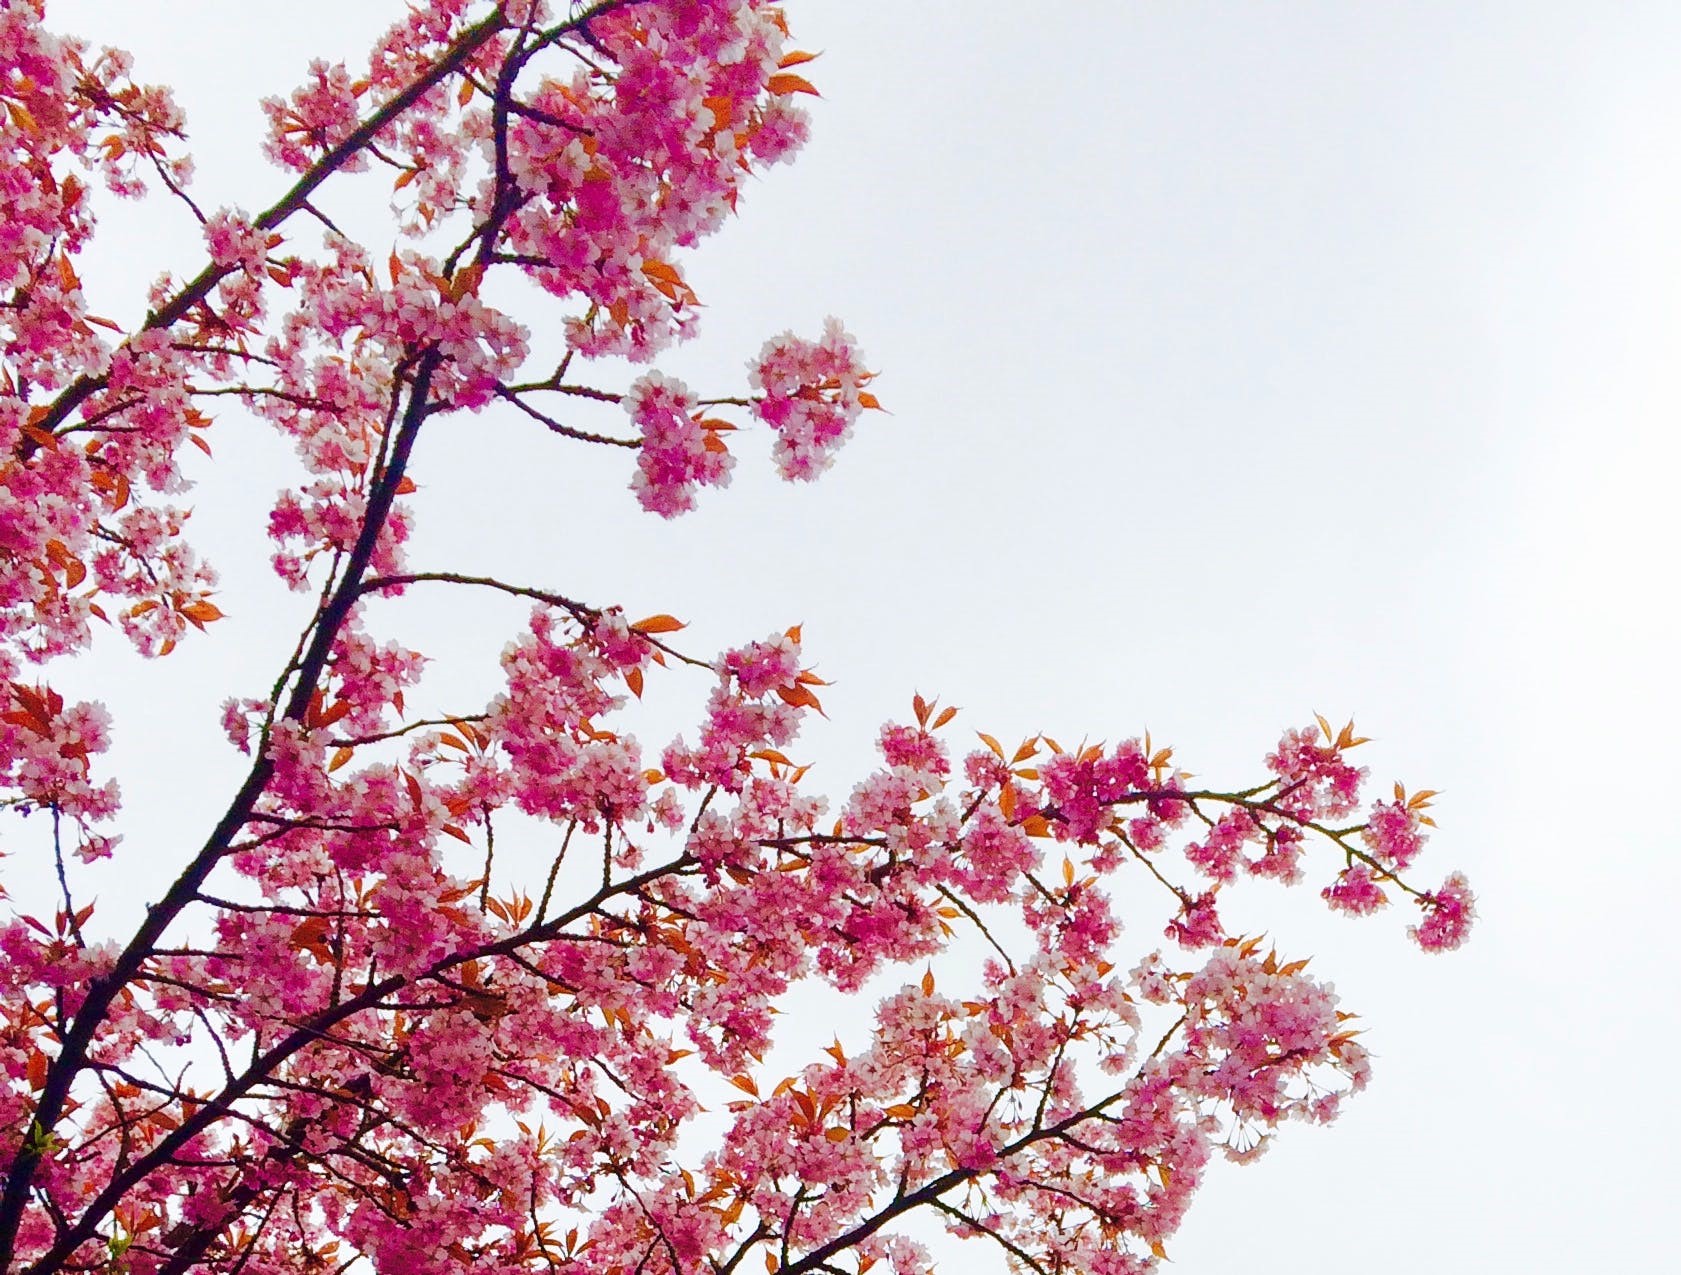 cherry blossom tree branch against light background